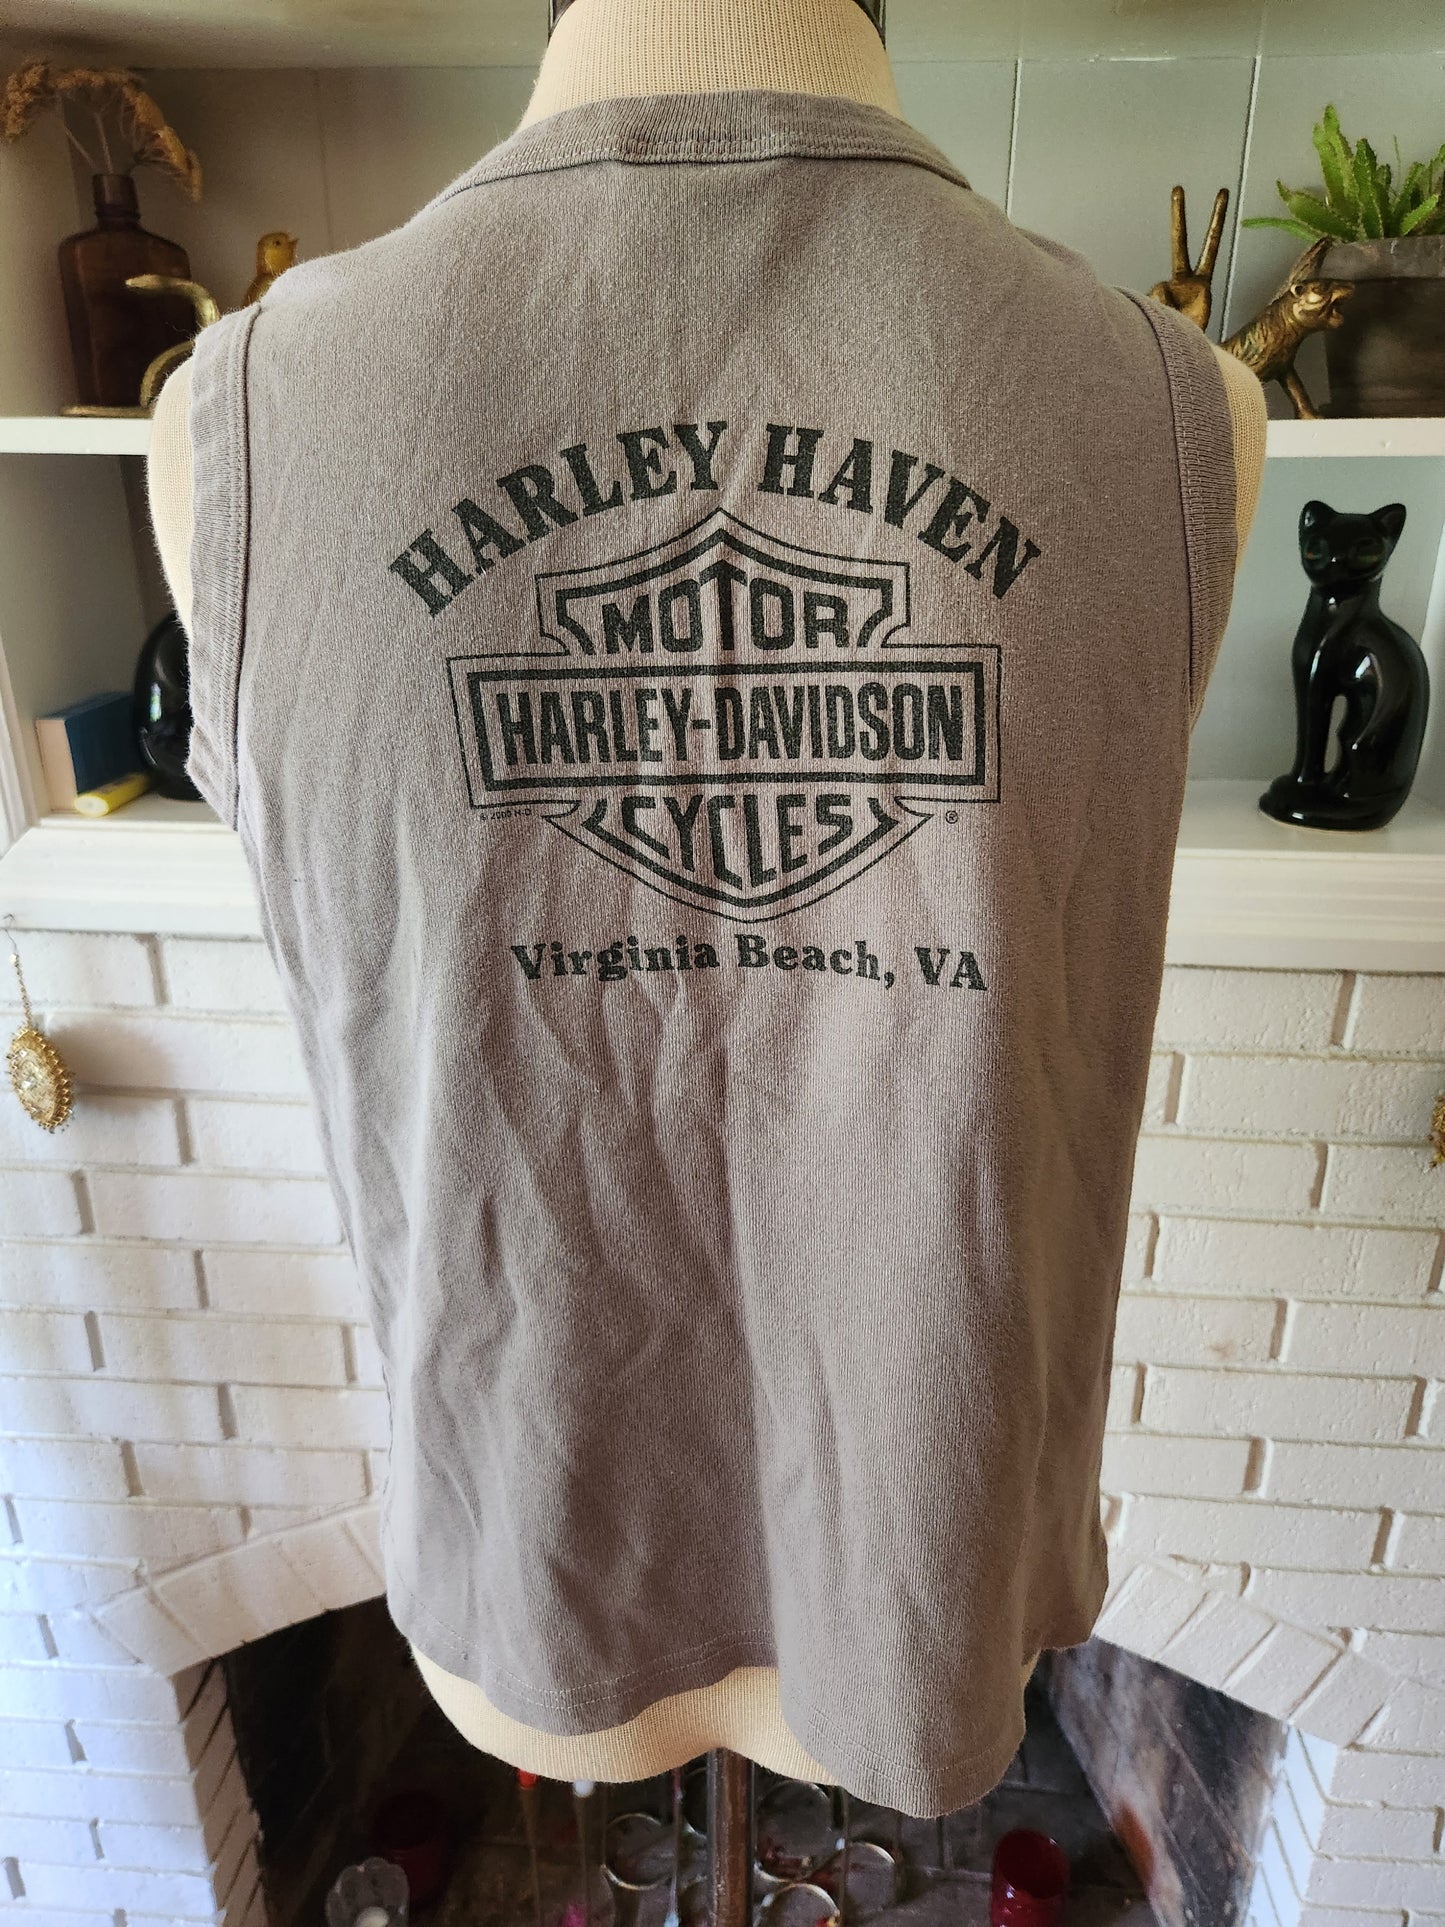 Vintage Virginia Beach Harley Davidson Tank Top Shirt by R.K.Stratman